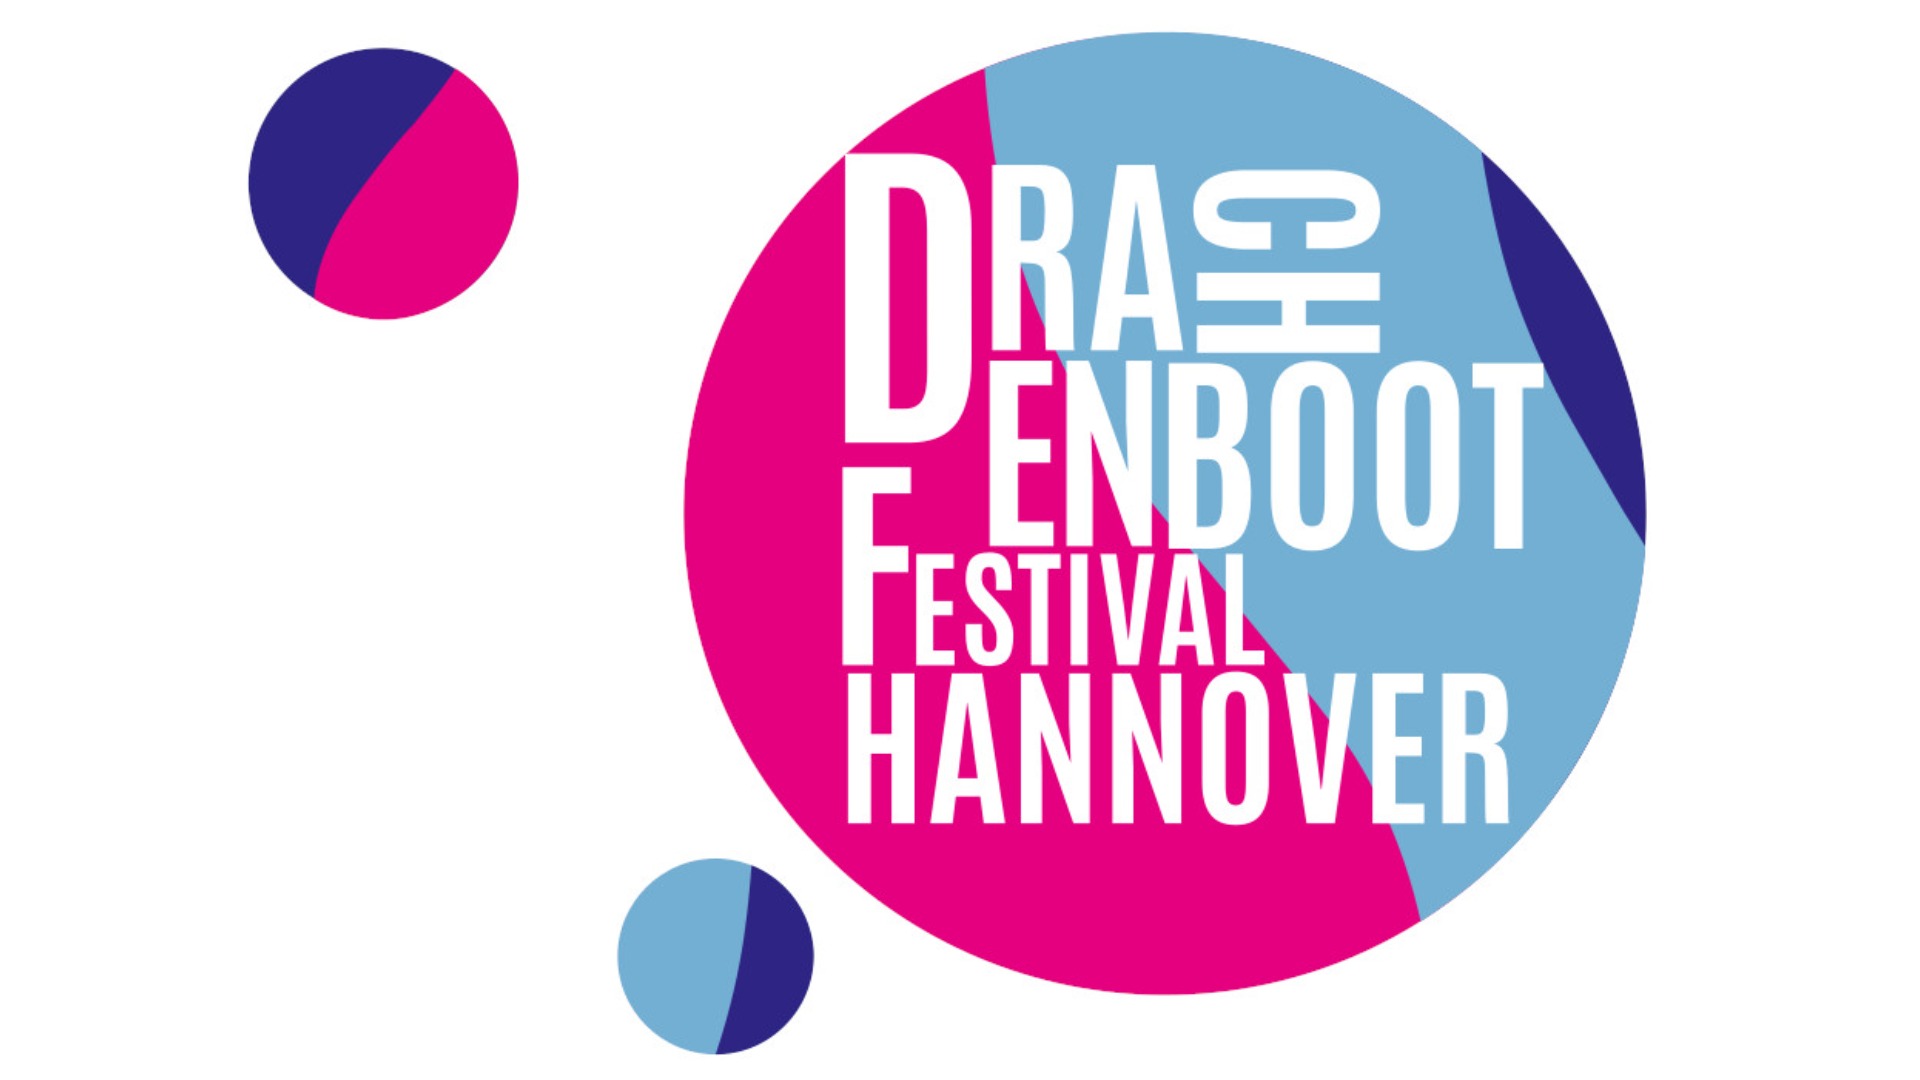 Drachenbootfestival Hannover 2022